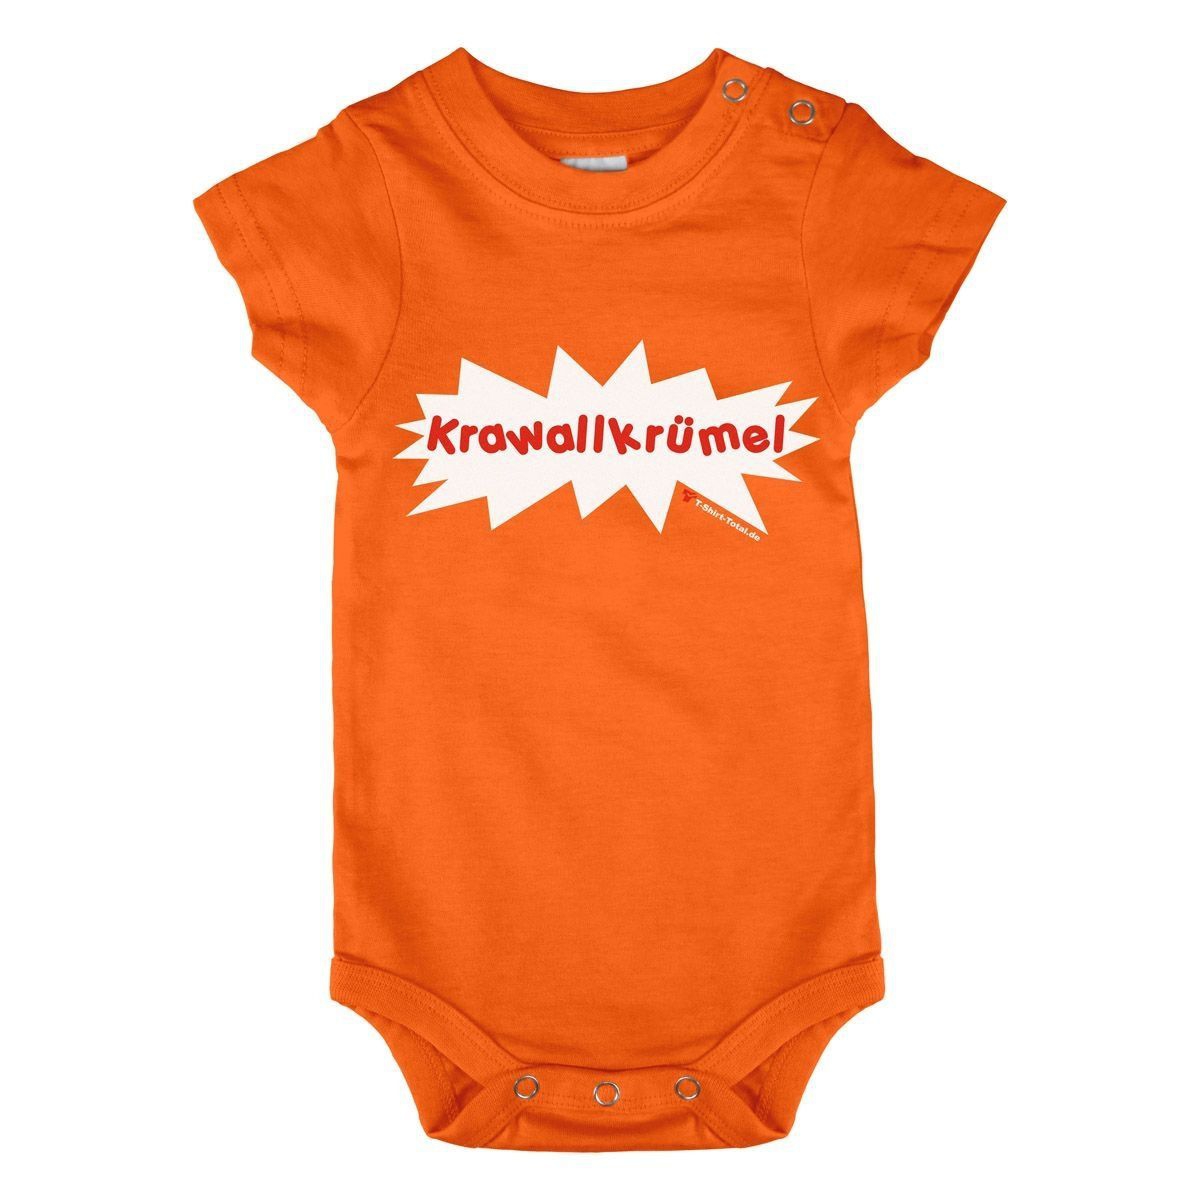 Krawallkrümel Baby Body Kurzarm orange 68 / 74